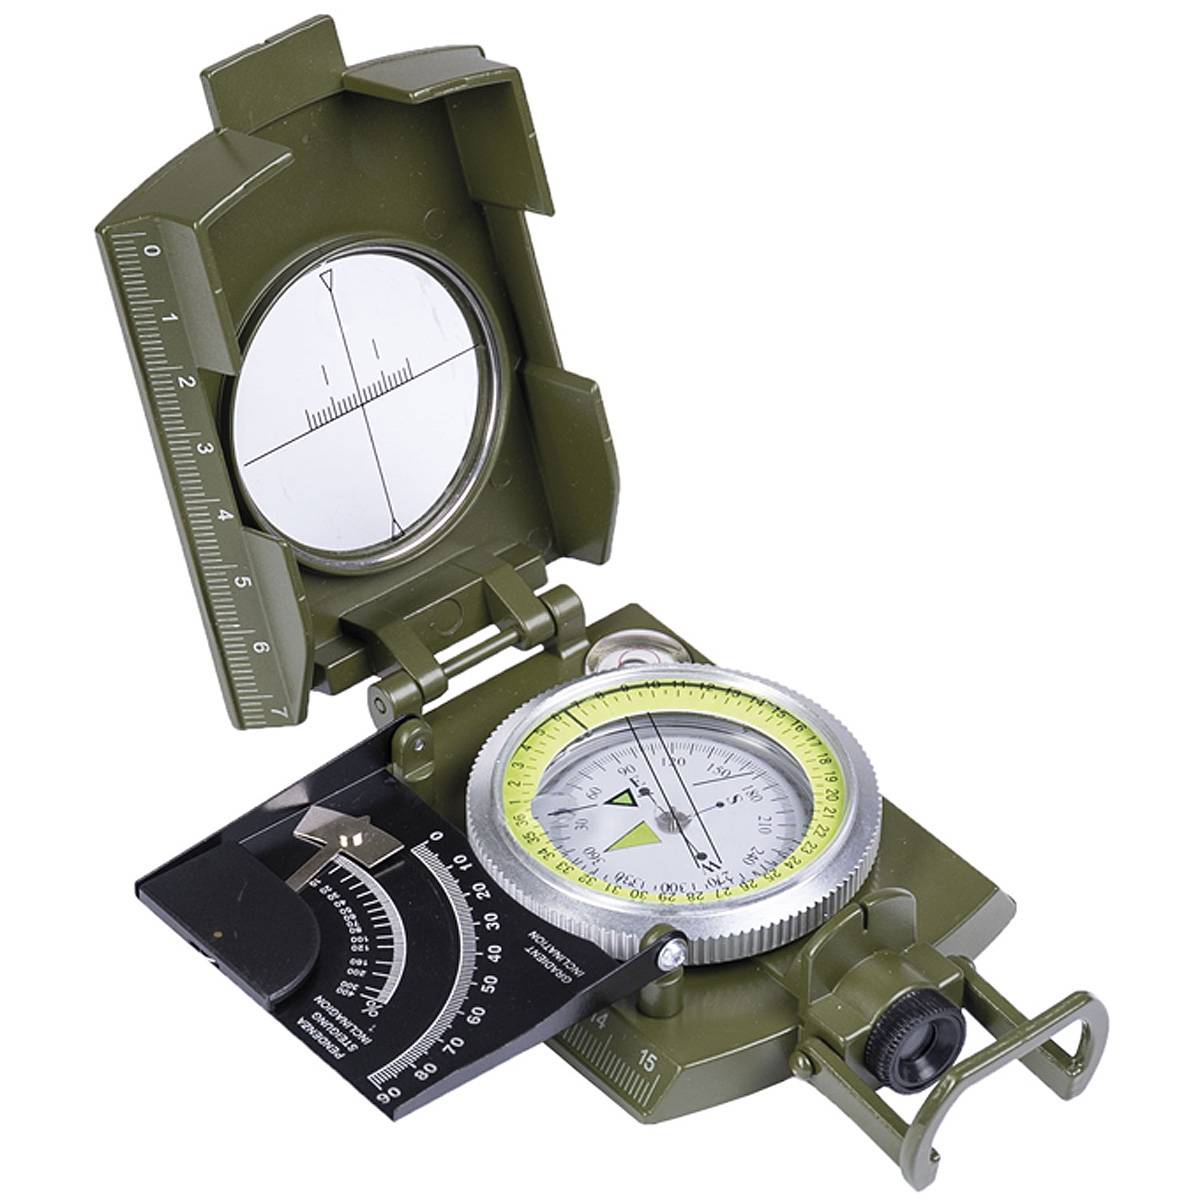 Armeekompass mit Etui Metallgehäuse Kompass Marschkompass Hiking Camping Compass 